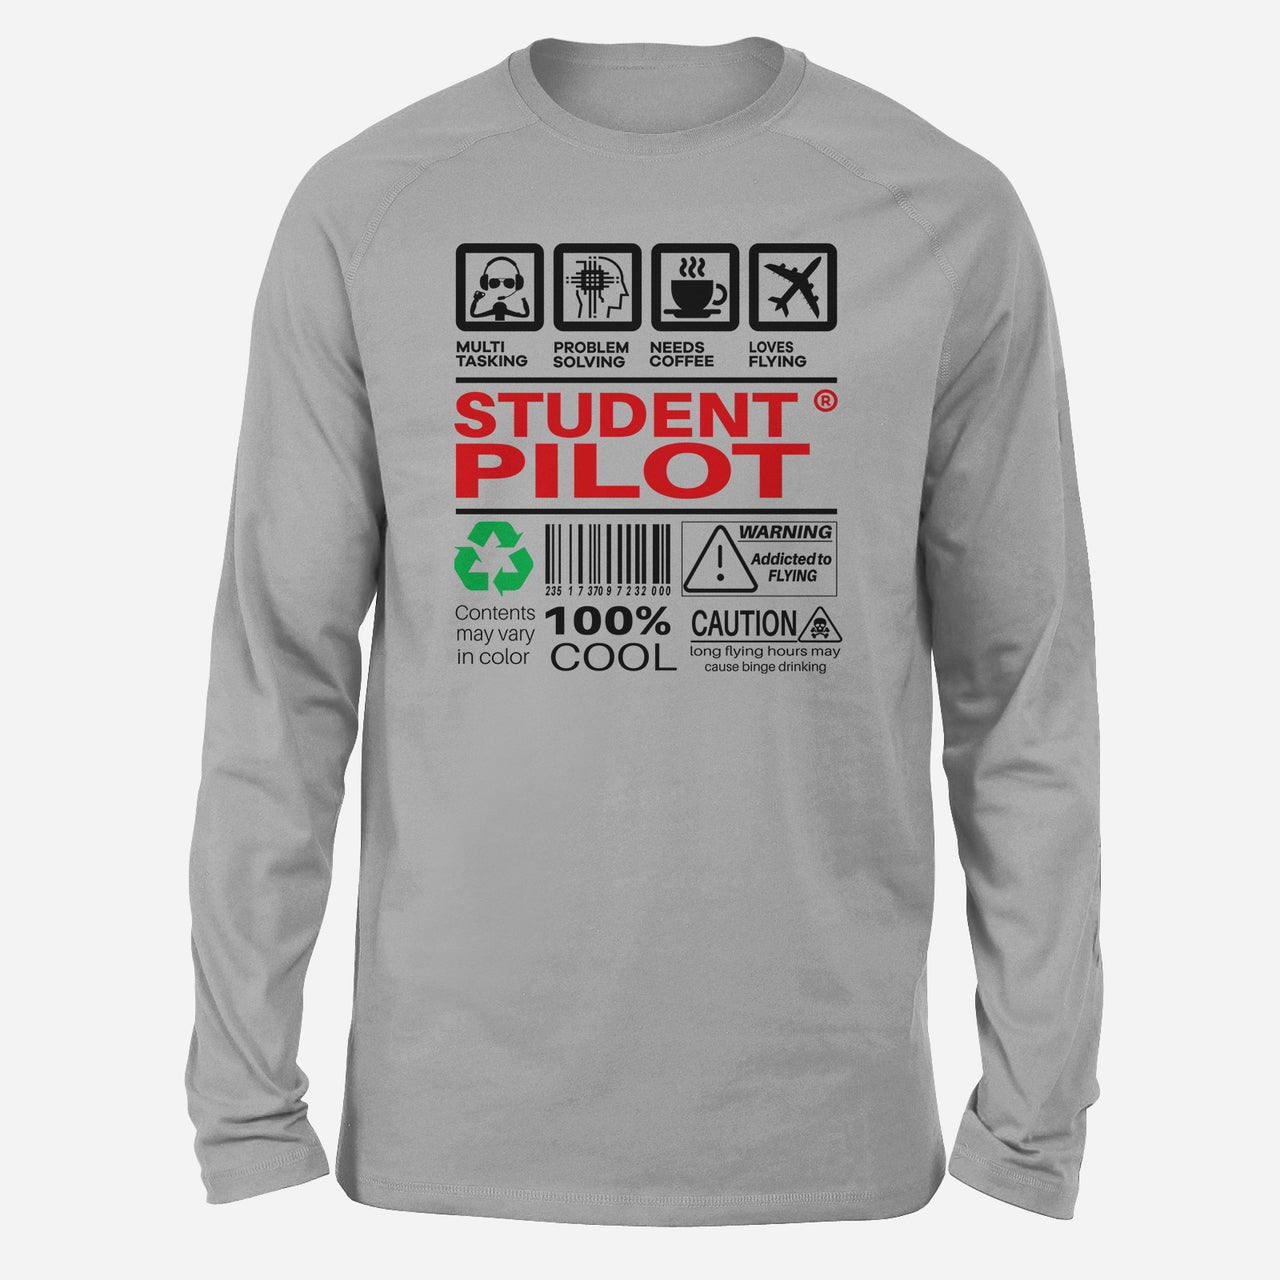 Student Pilot Label Designed Long-Sleeve T-Shirts